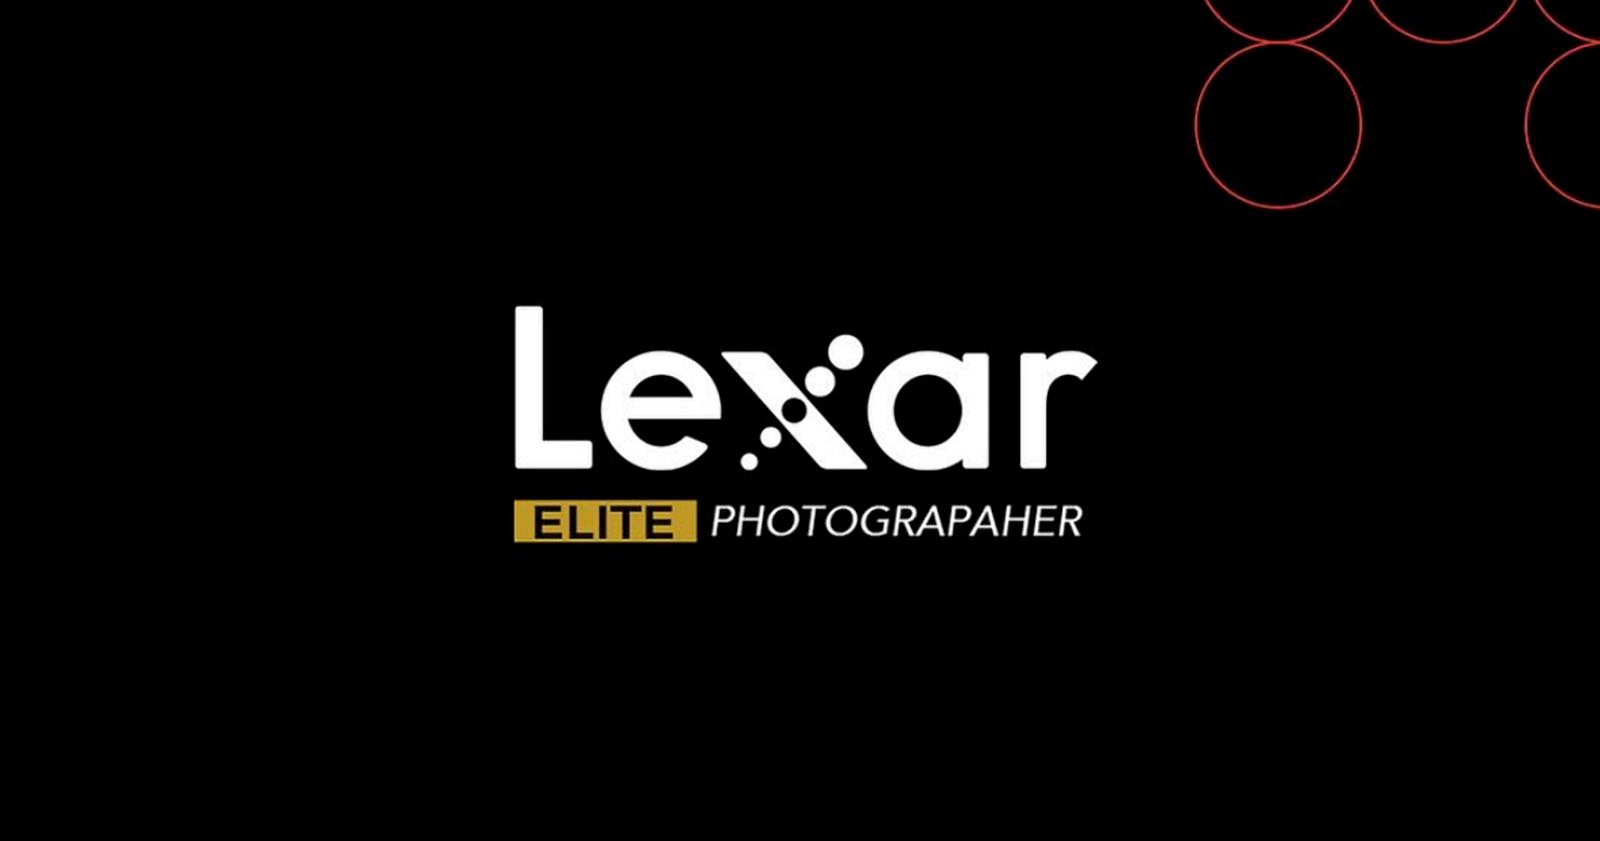 Lexar Elite Photographers gaffe